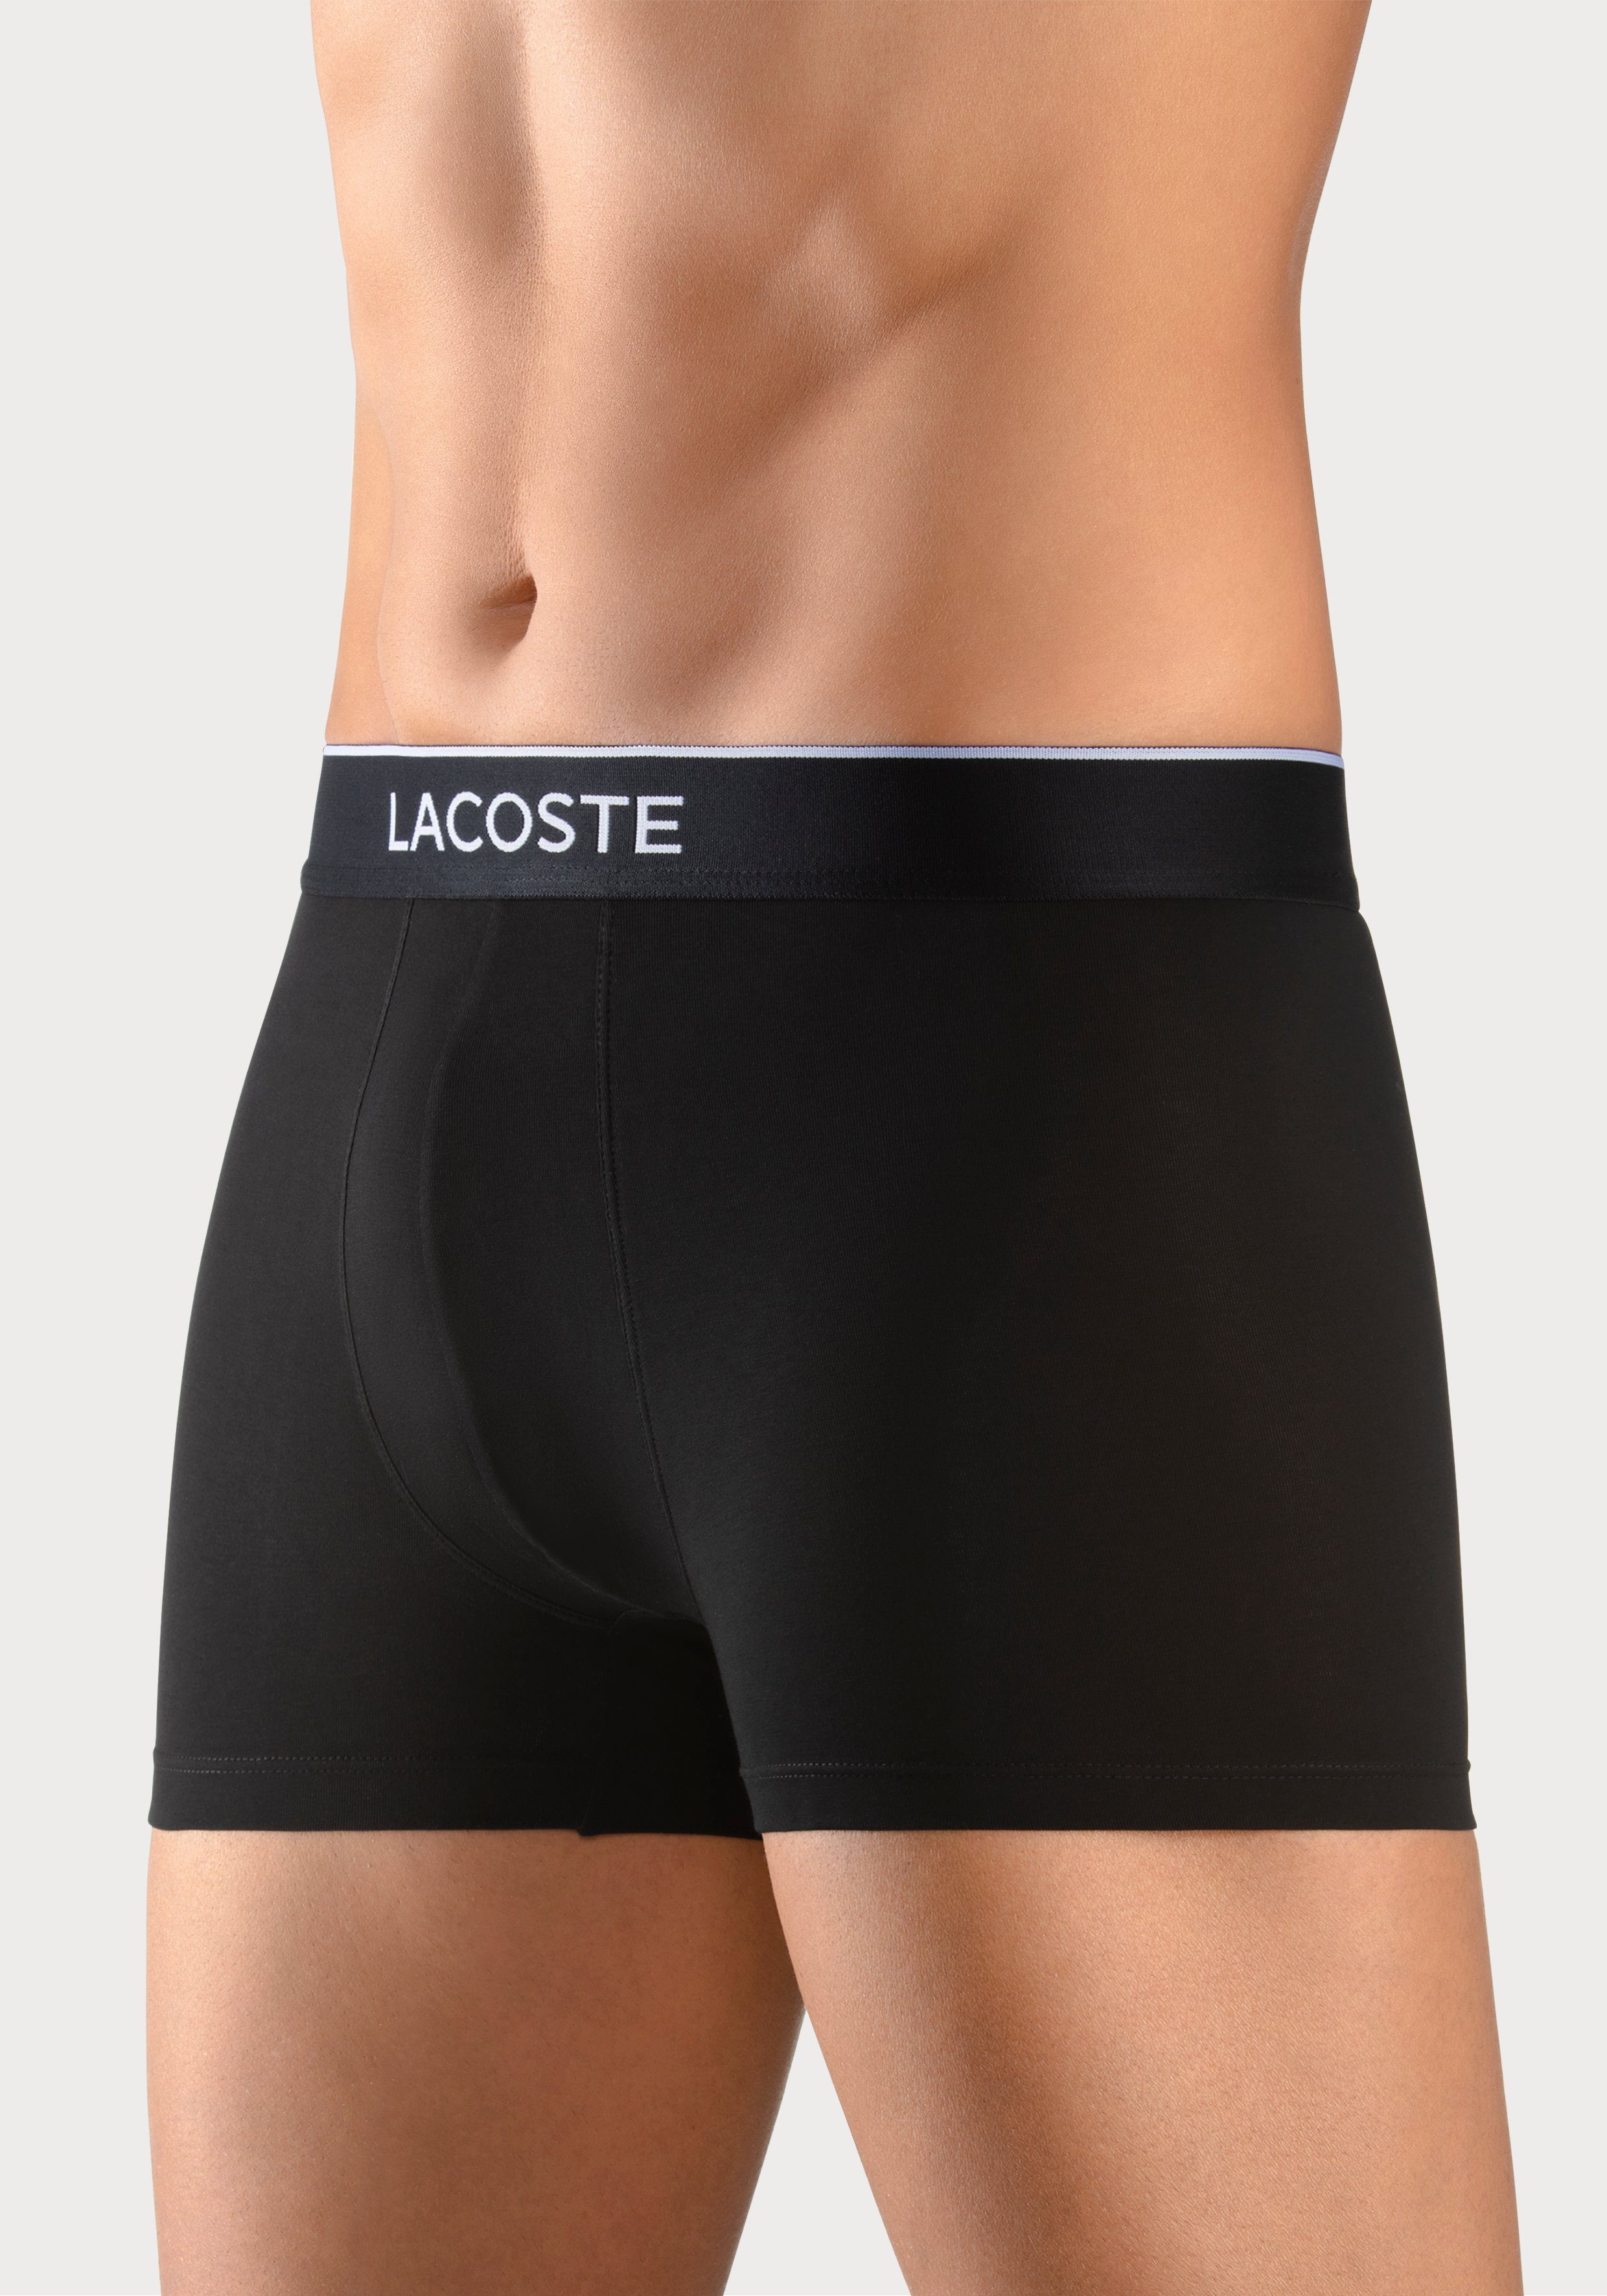 atmungsaktivem aus 3er-Pack) 3-St., schwarz Trunk Herren Lacoste Material Premium Boxershorts eng Lacoste (Packung,